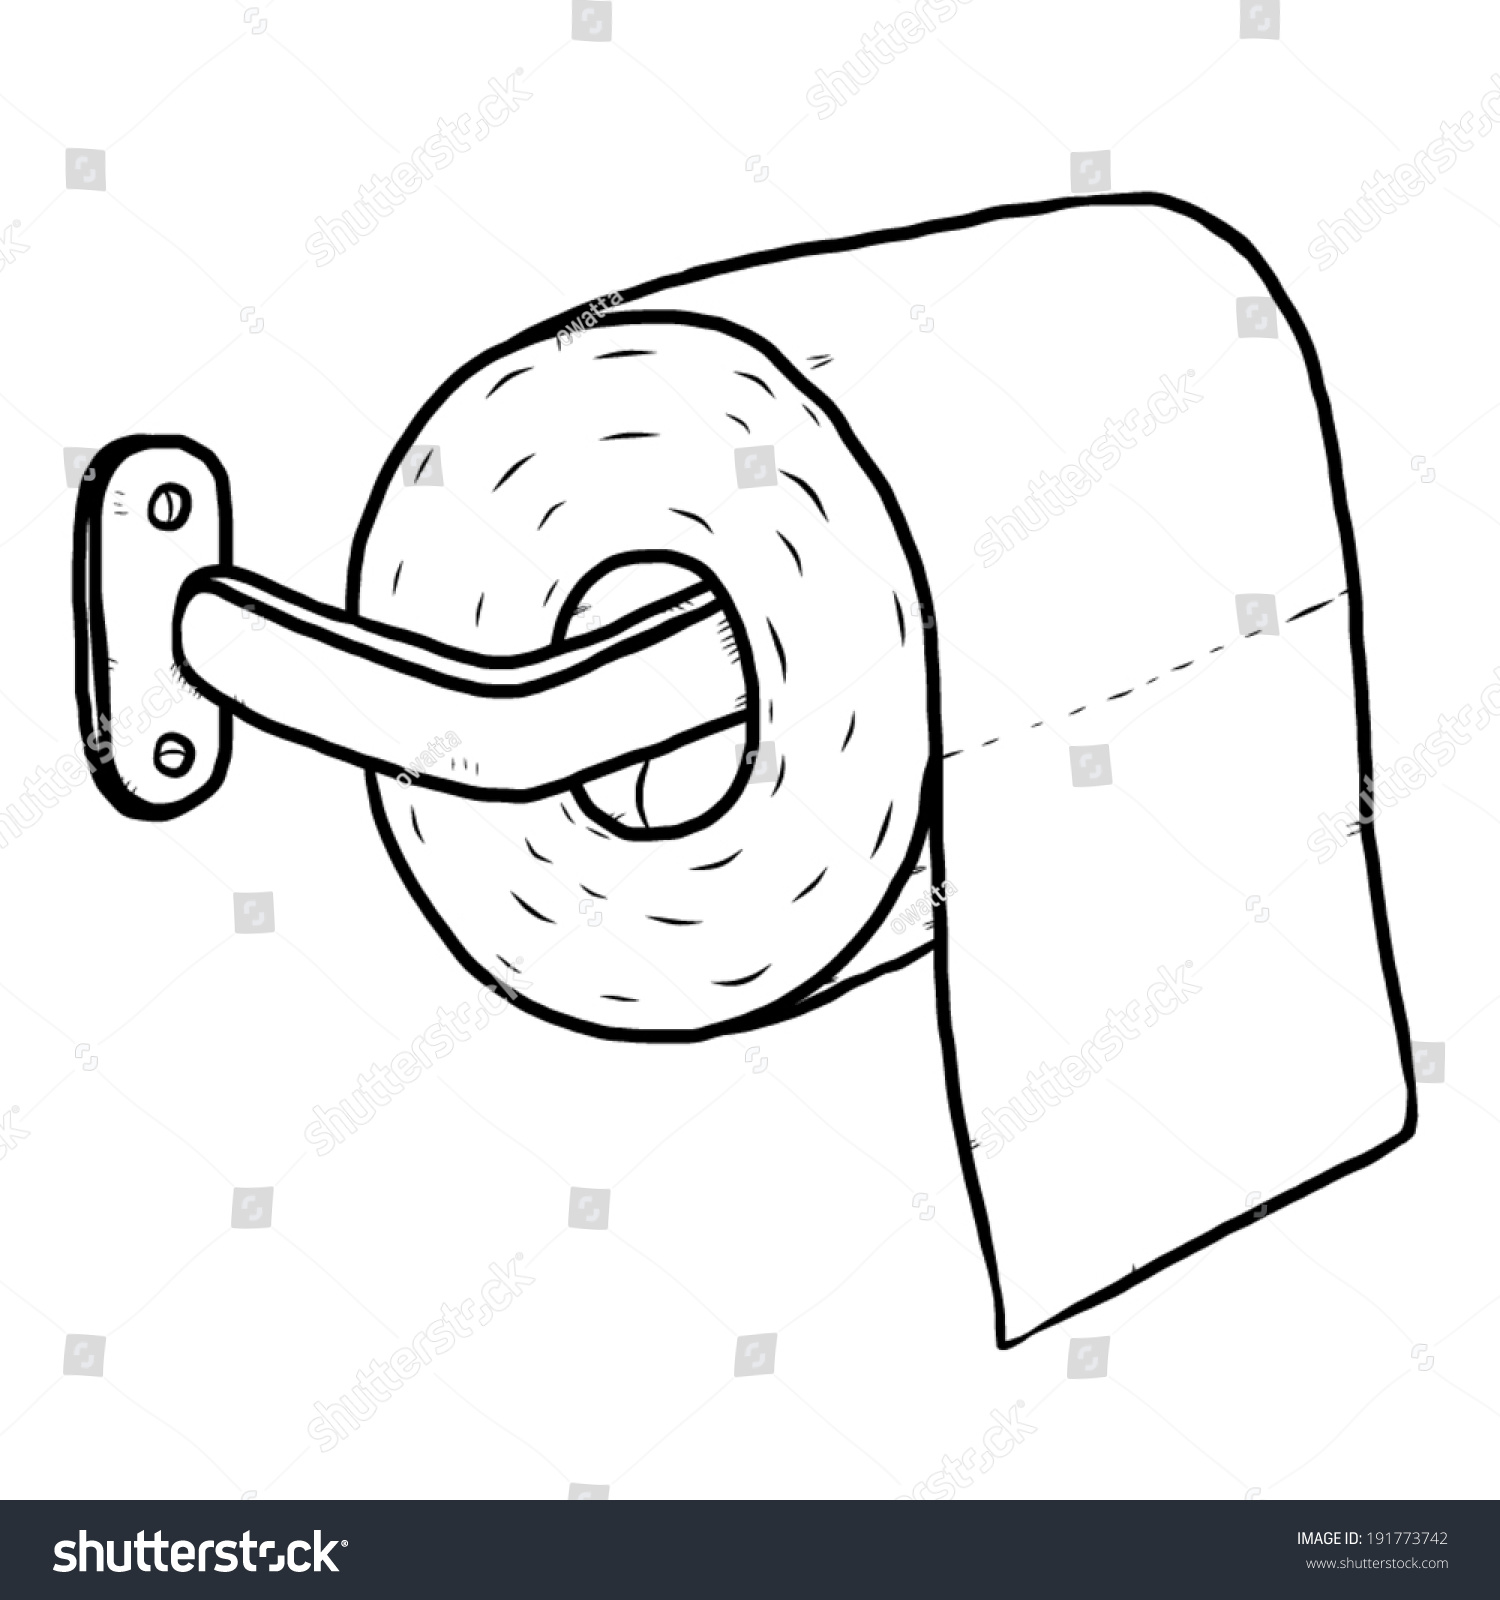 toilet tissue clipart - photo #47